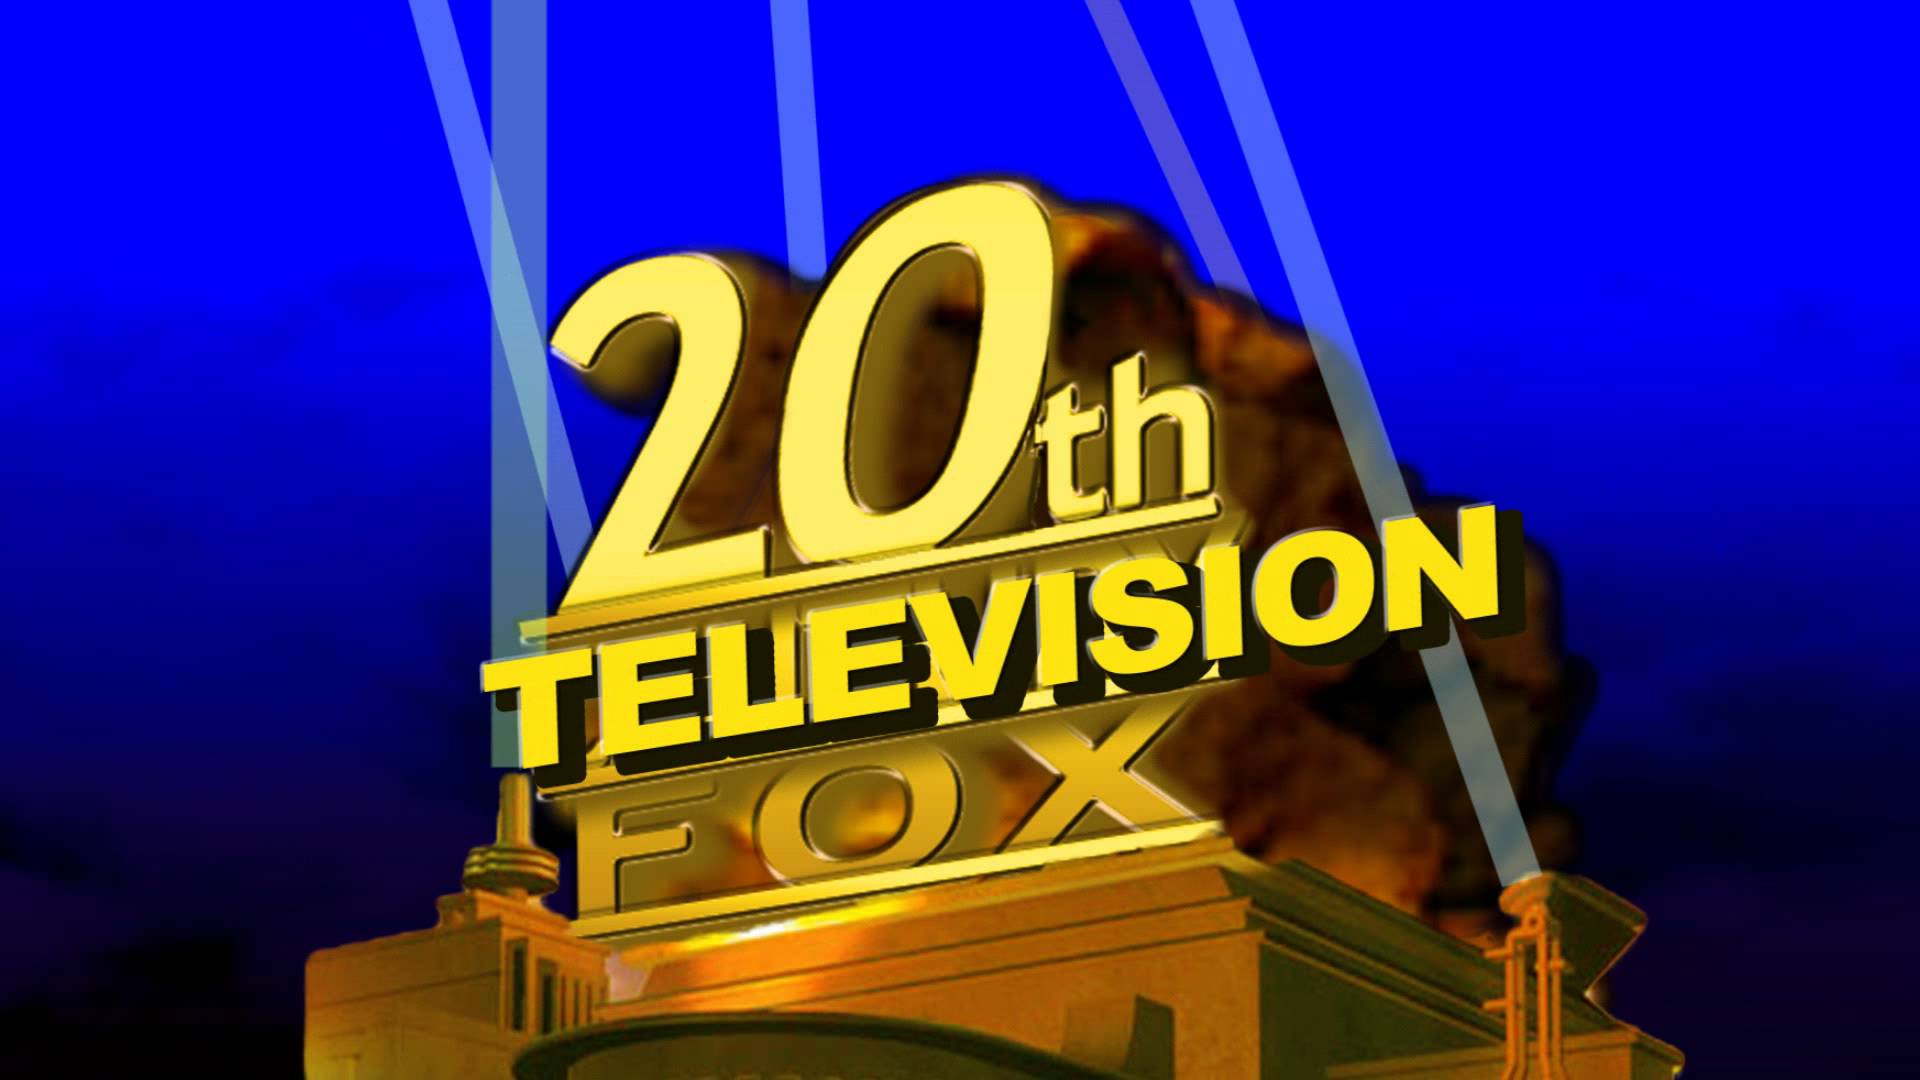 Roblox 20th Century Fox Logo Remake